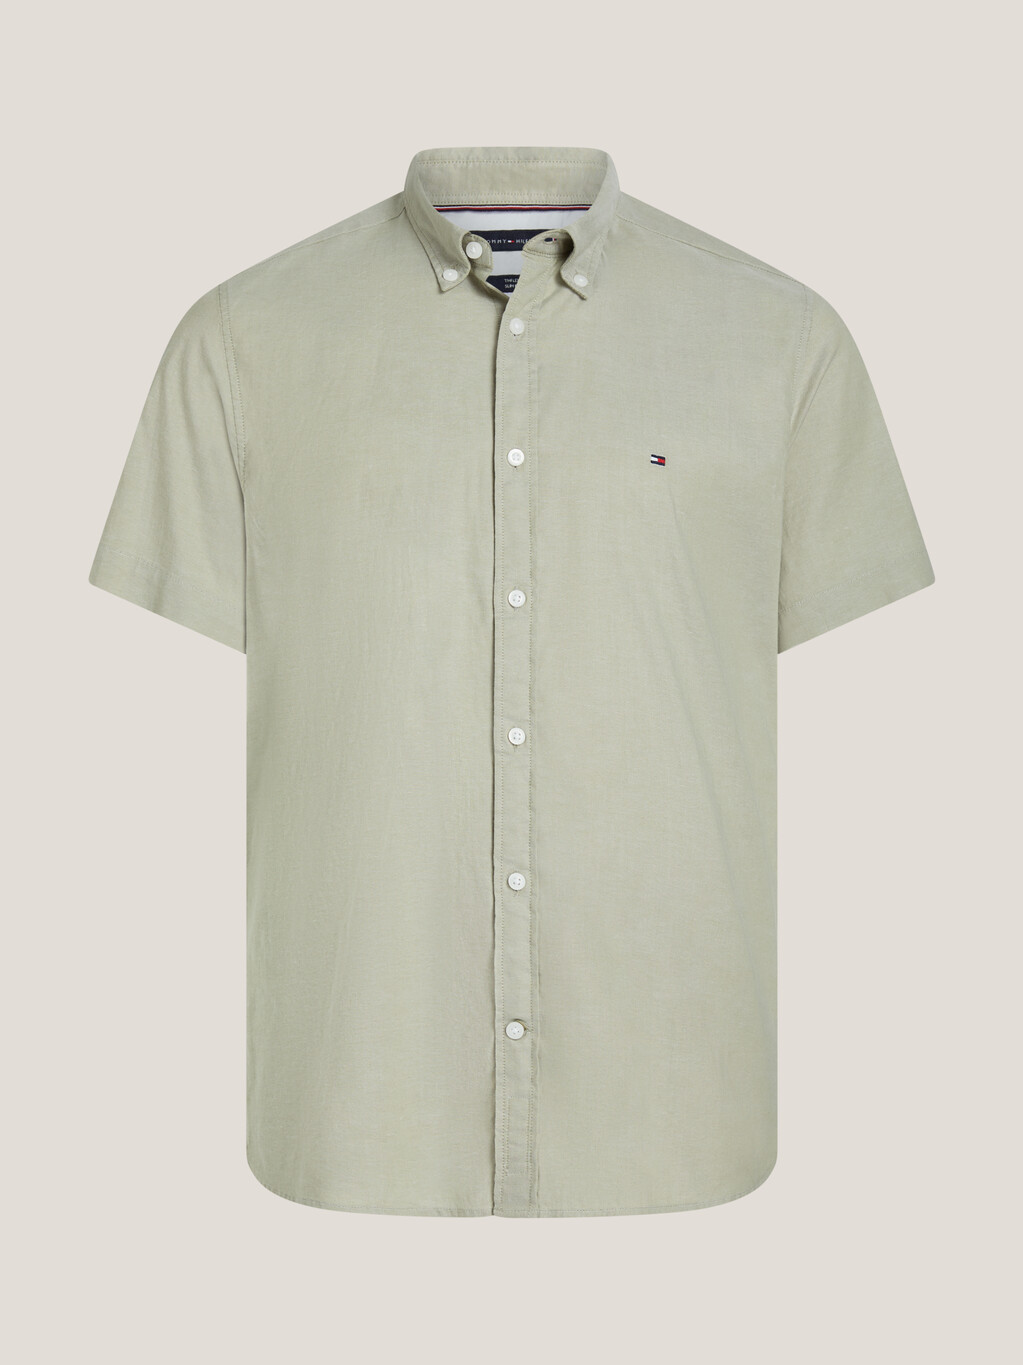 Essential Short Sleeve Shirt, Faded Olive, hi-res